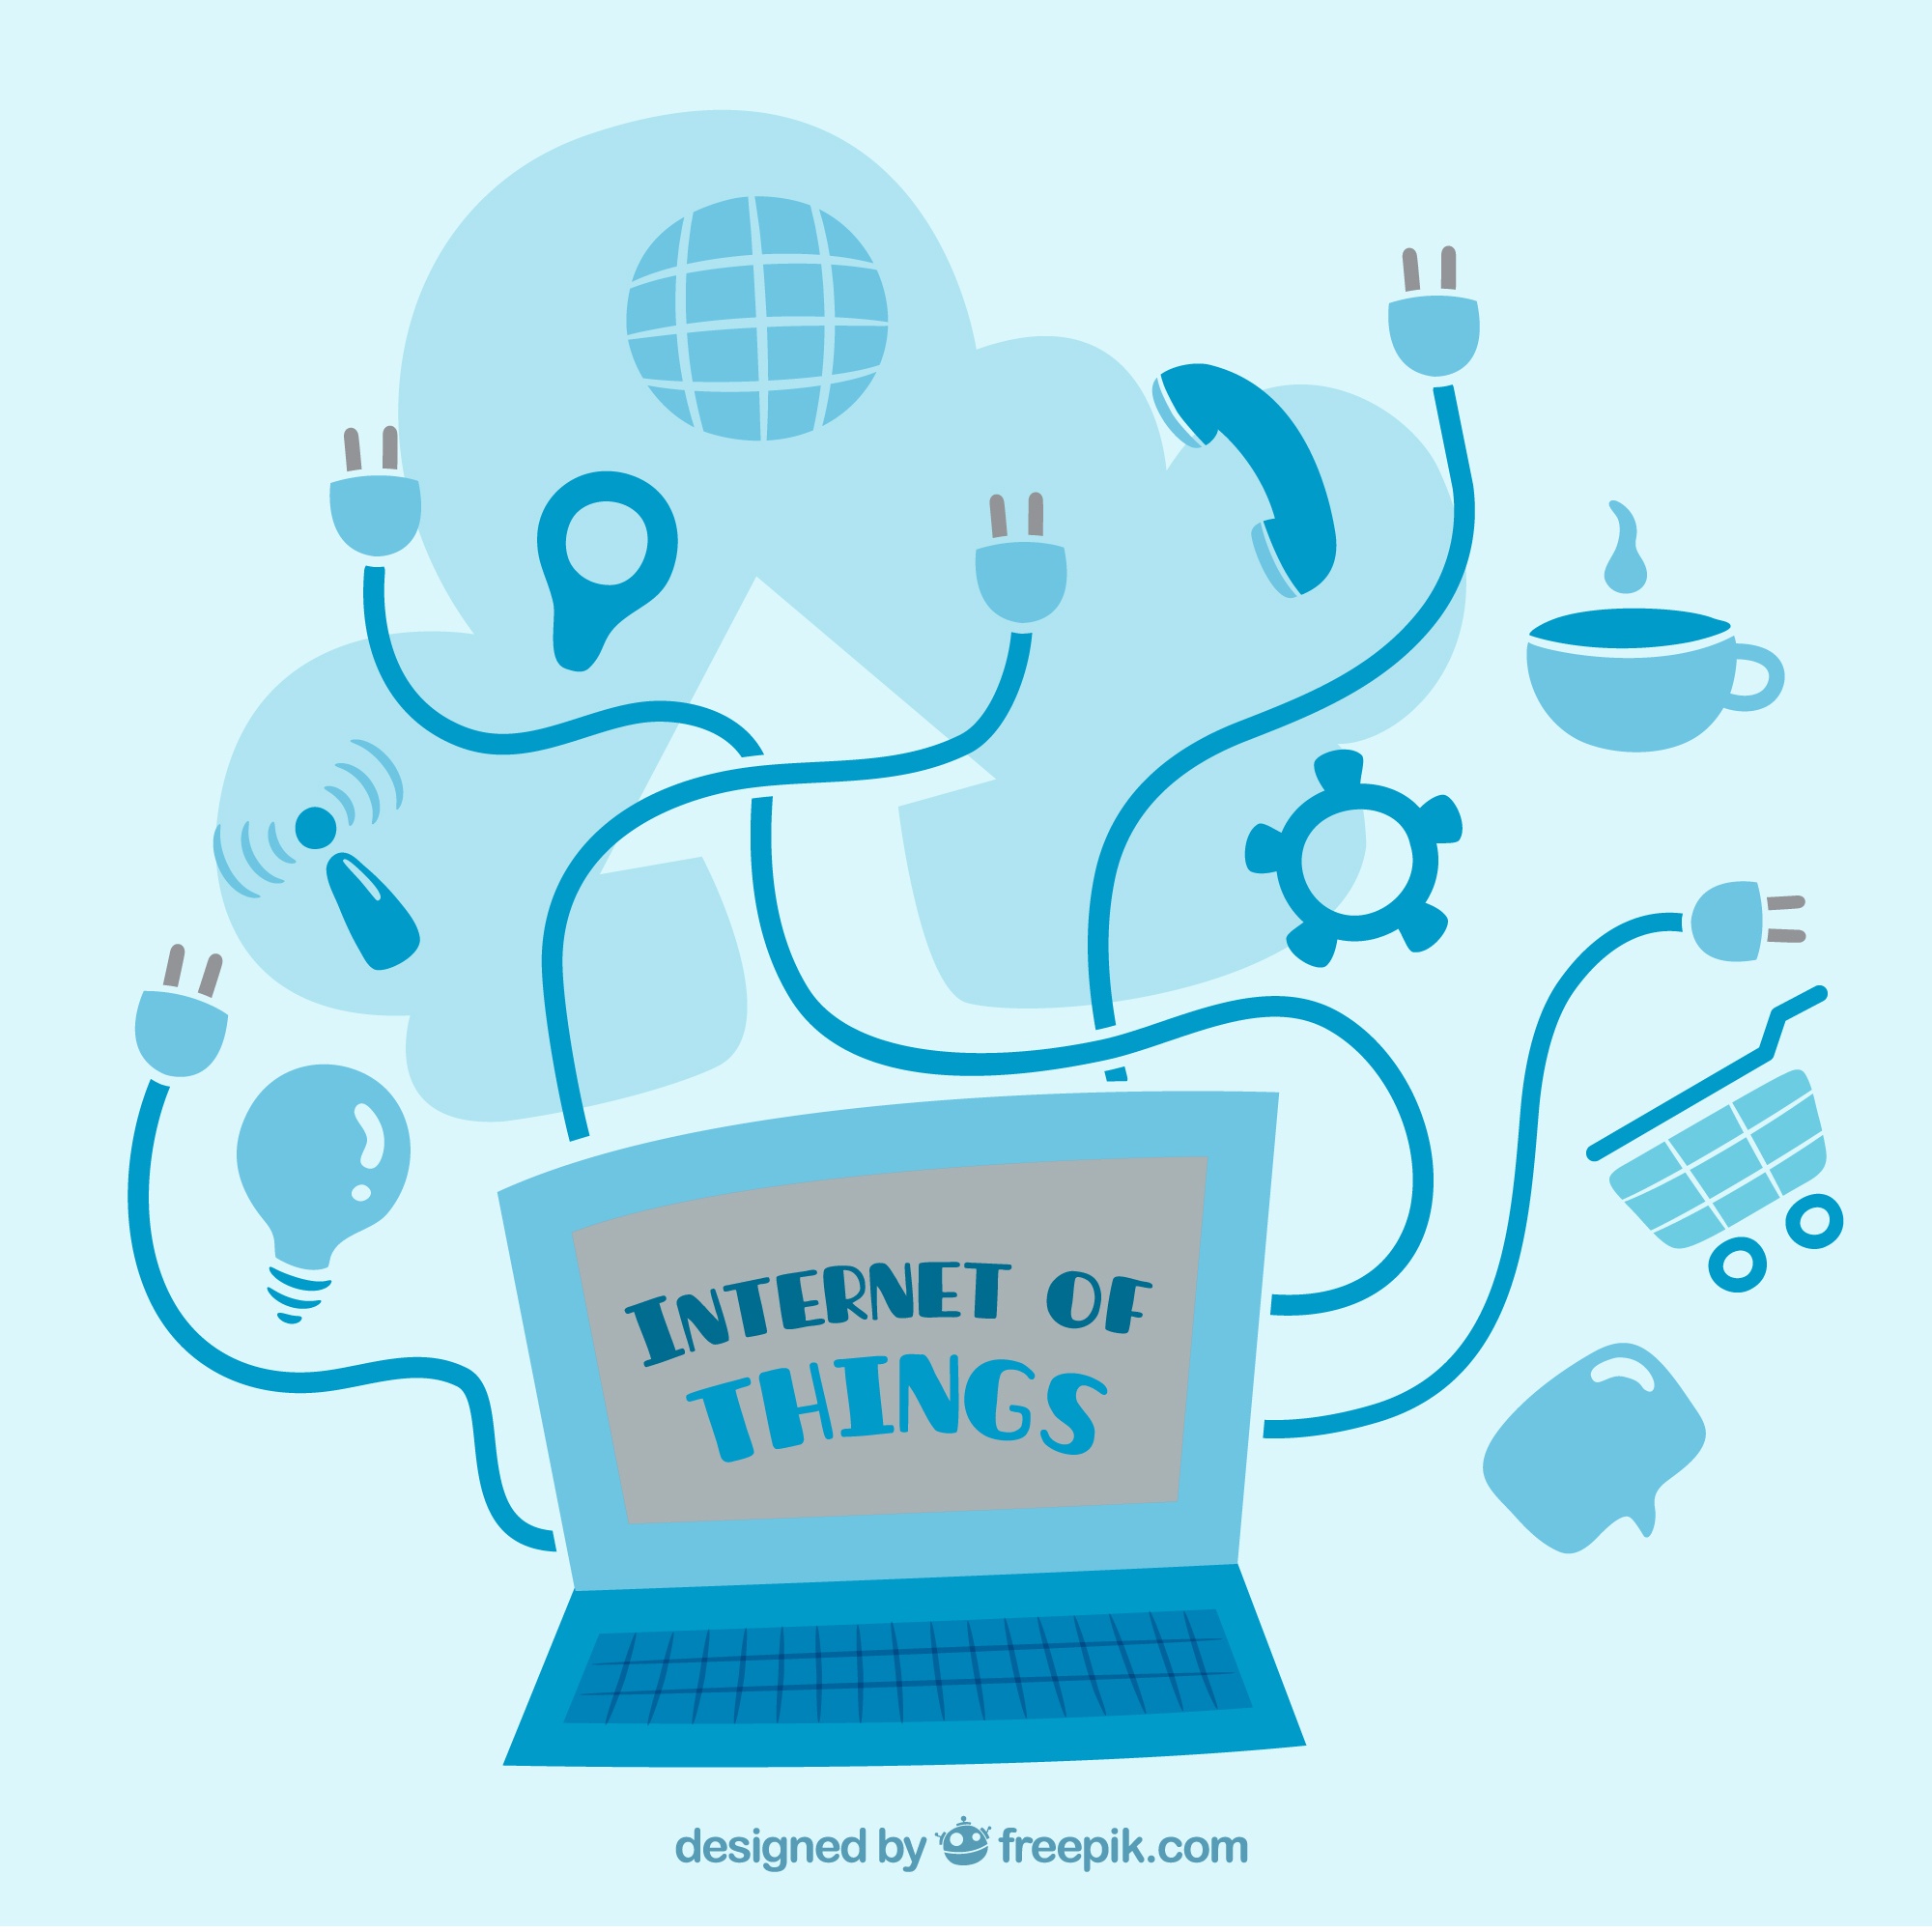 اینترنت اشیا (Internet of things – IoT)